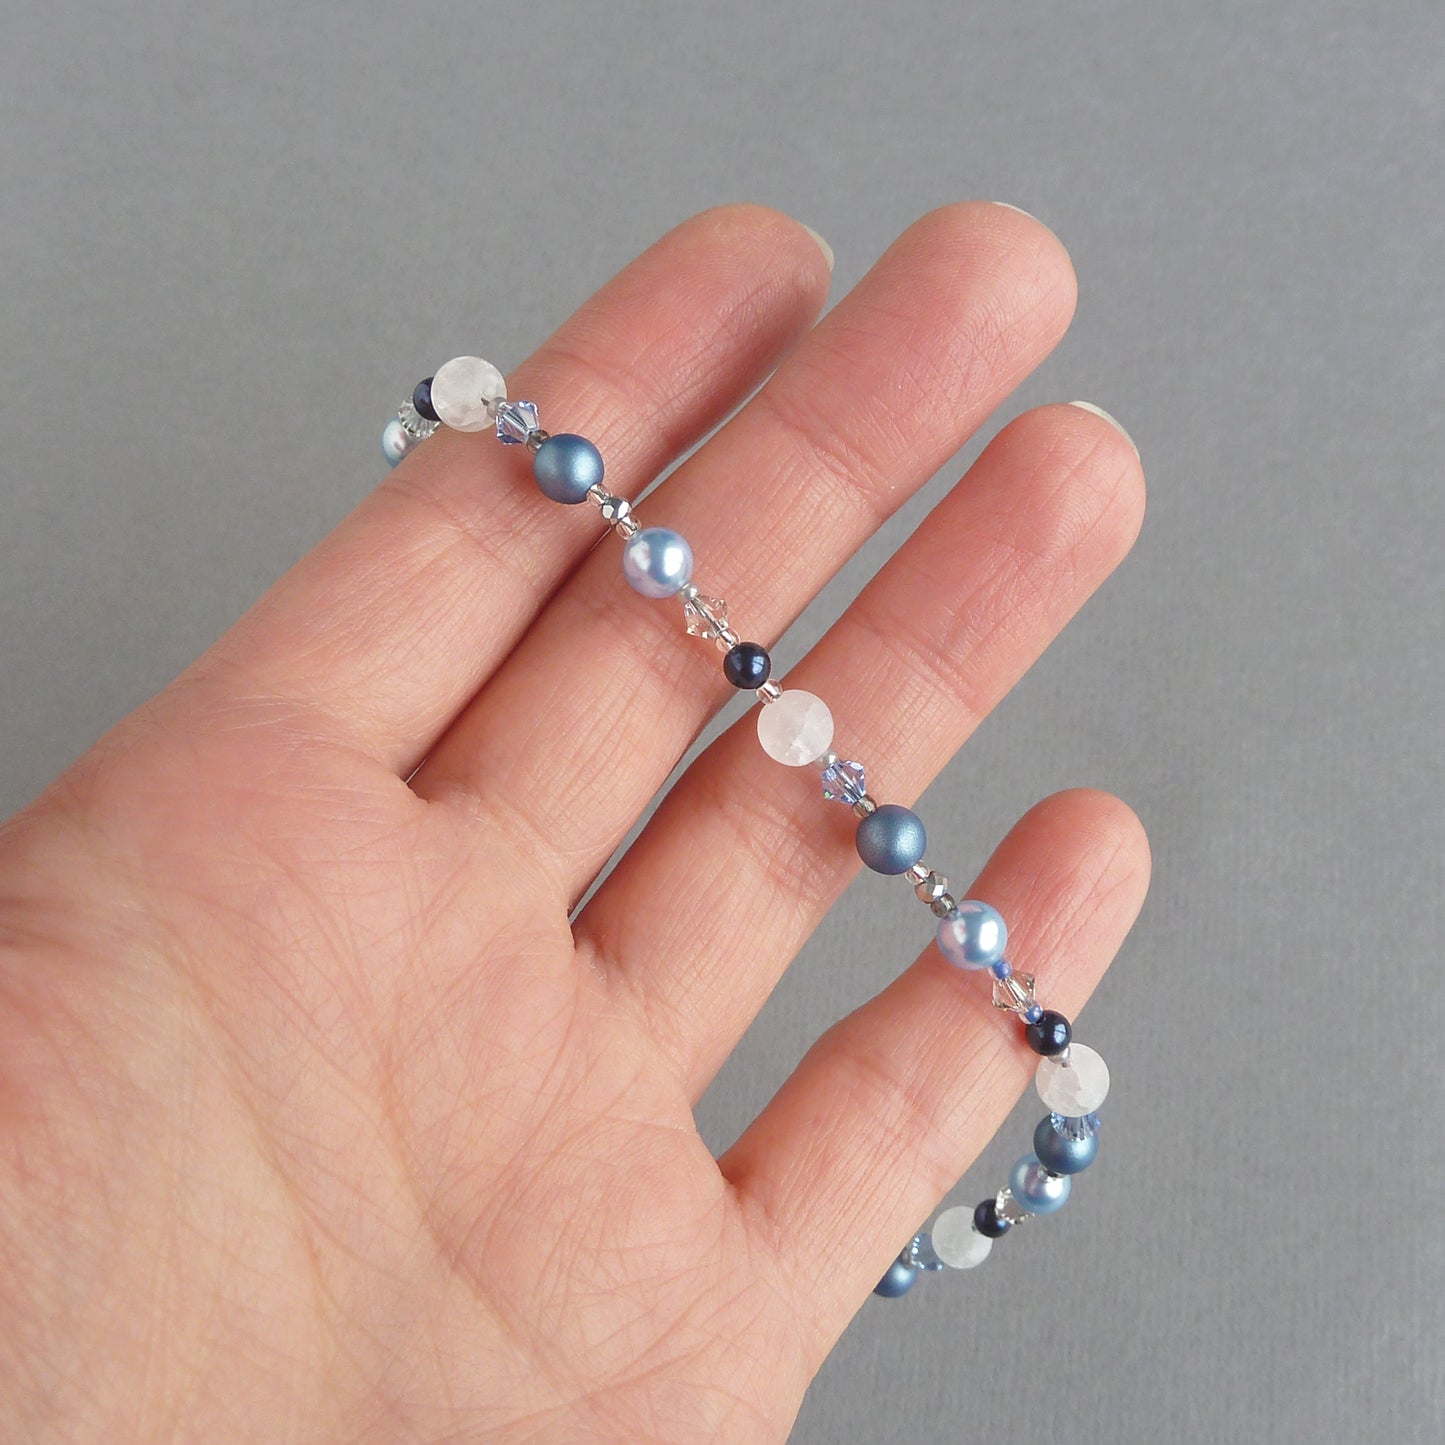 Blue pearl bridesmaids necklace